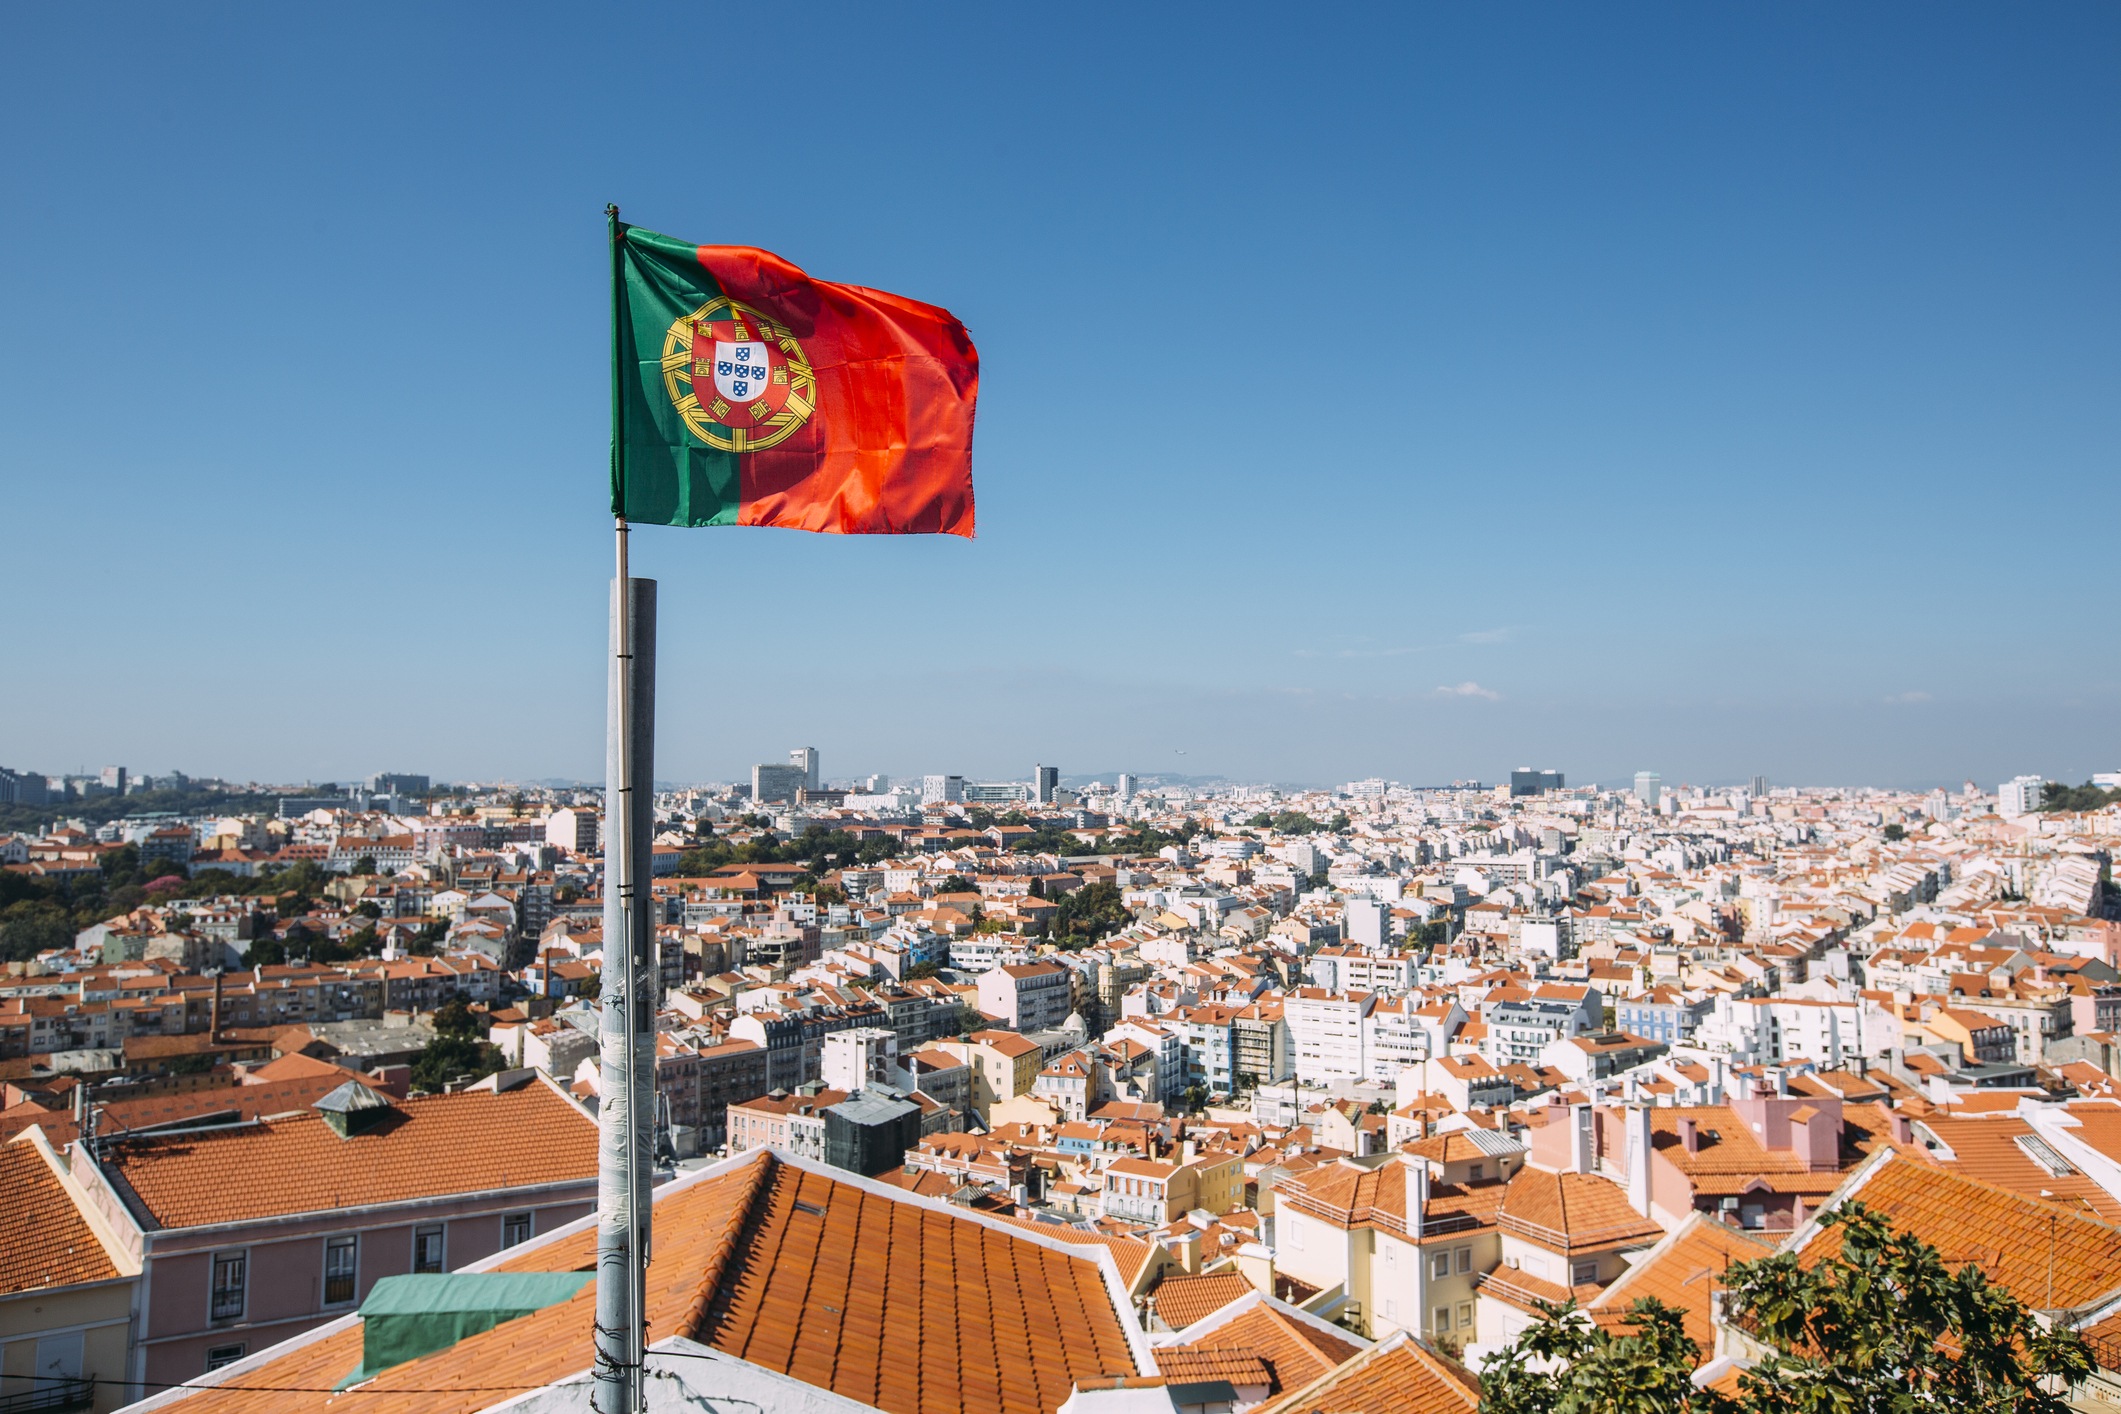 Brazilians lead in residence applications in Portugal in 2020